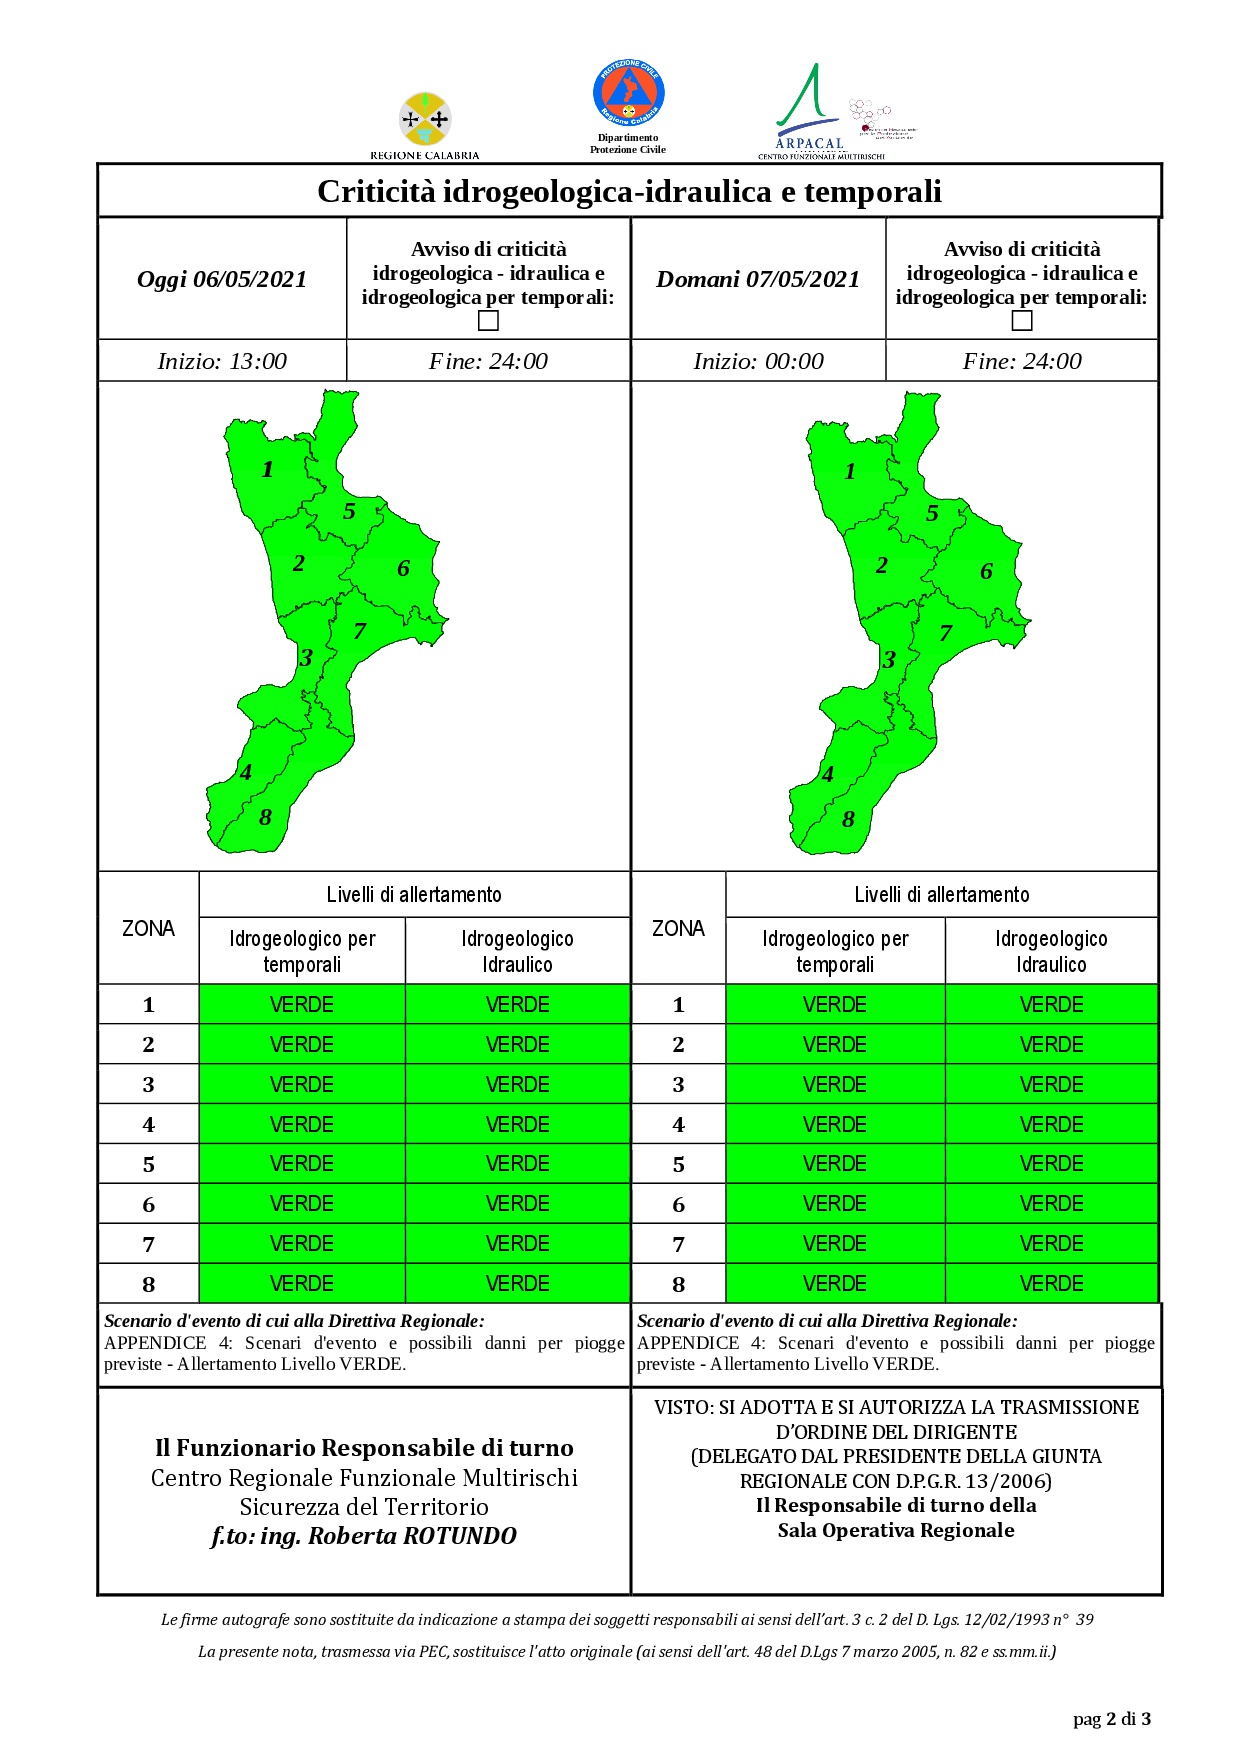 Criticità idrogeologica-idraulica e temporali in Calabria 06-05-2021